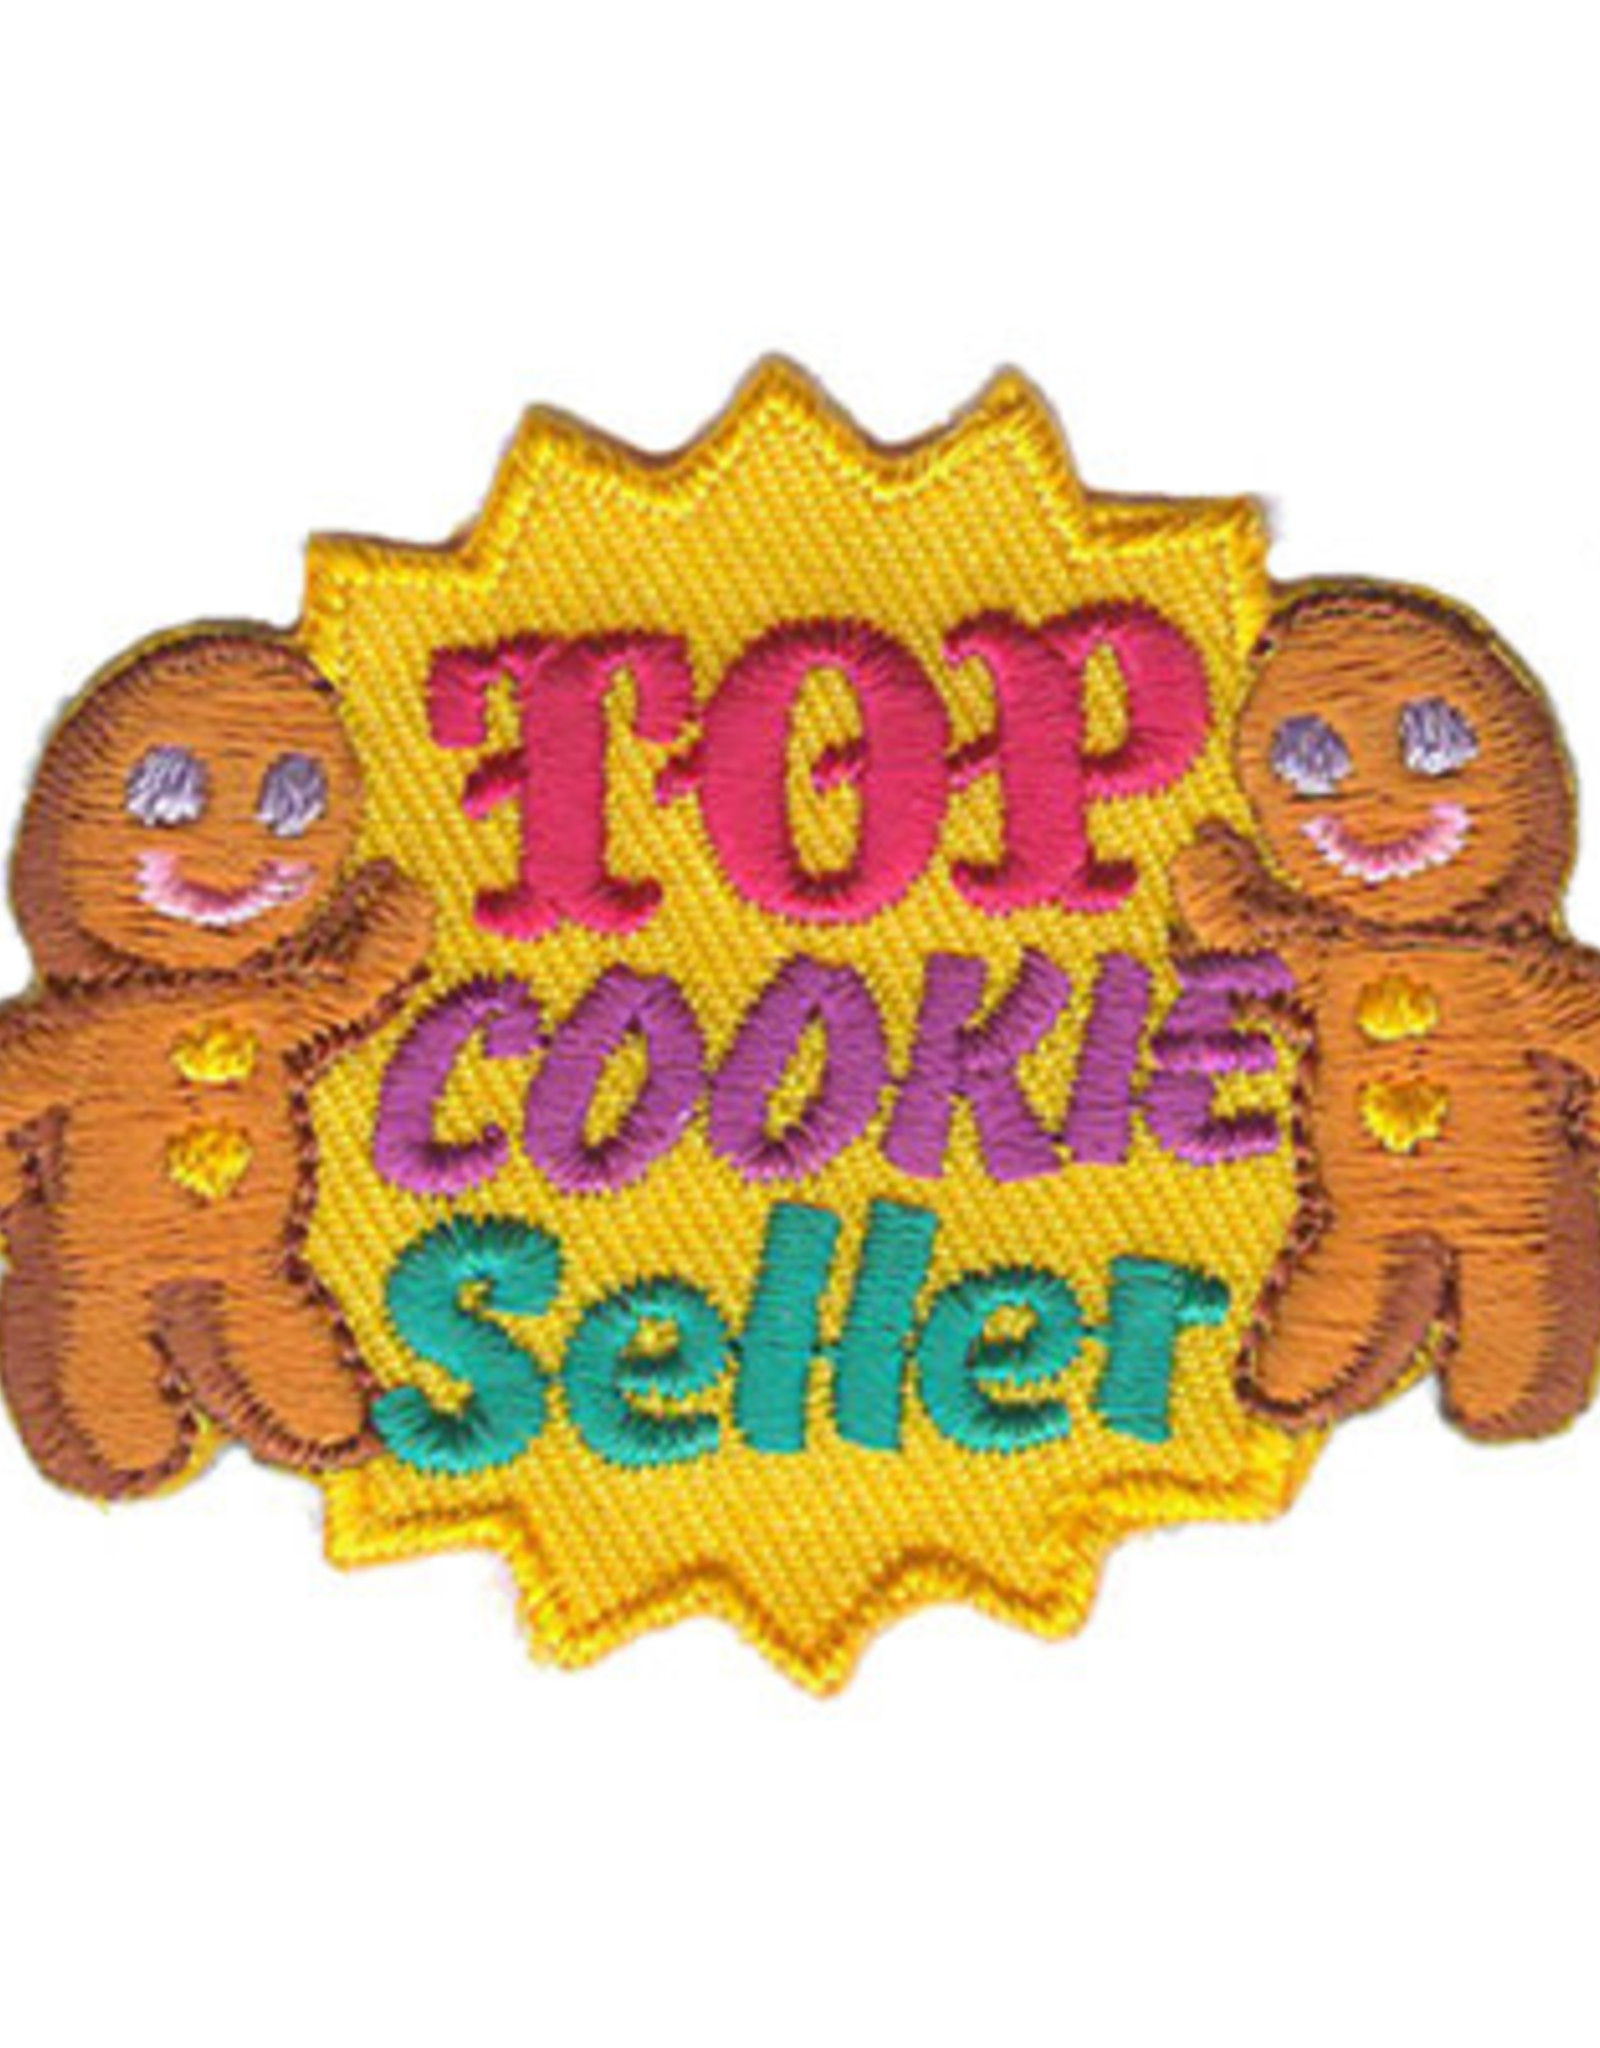 Advantage Emblem & Screen Prnt Top Cookie Seller /yellow background Gingerbreadmen